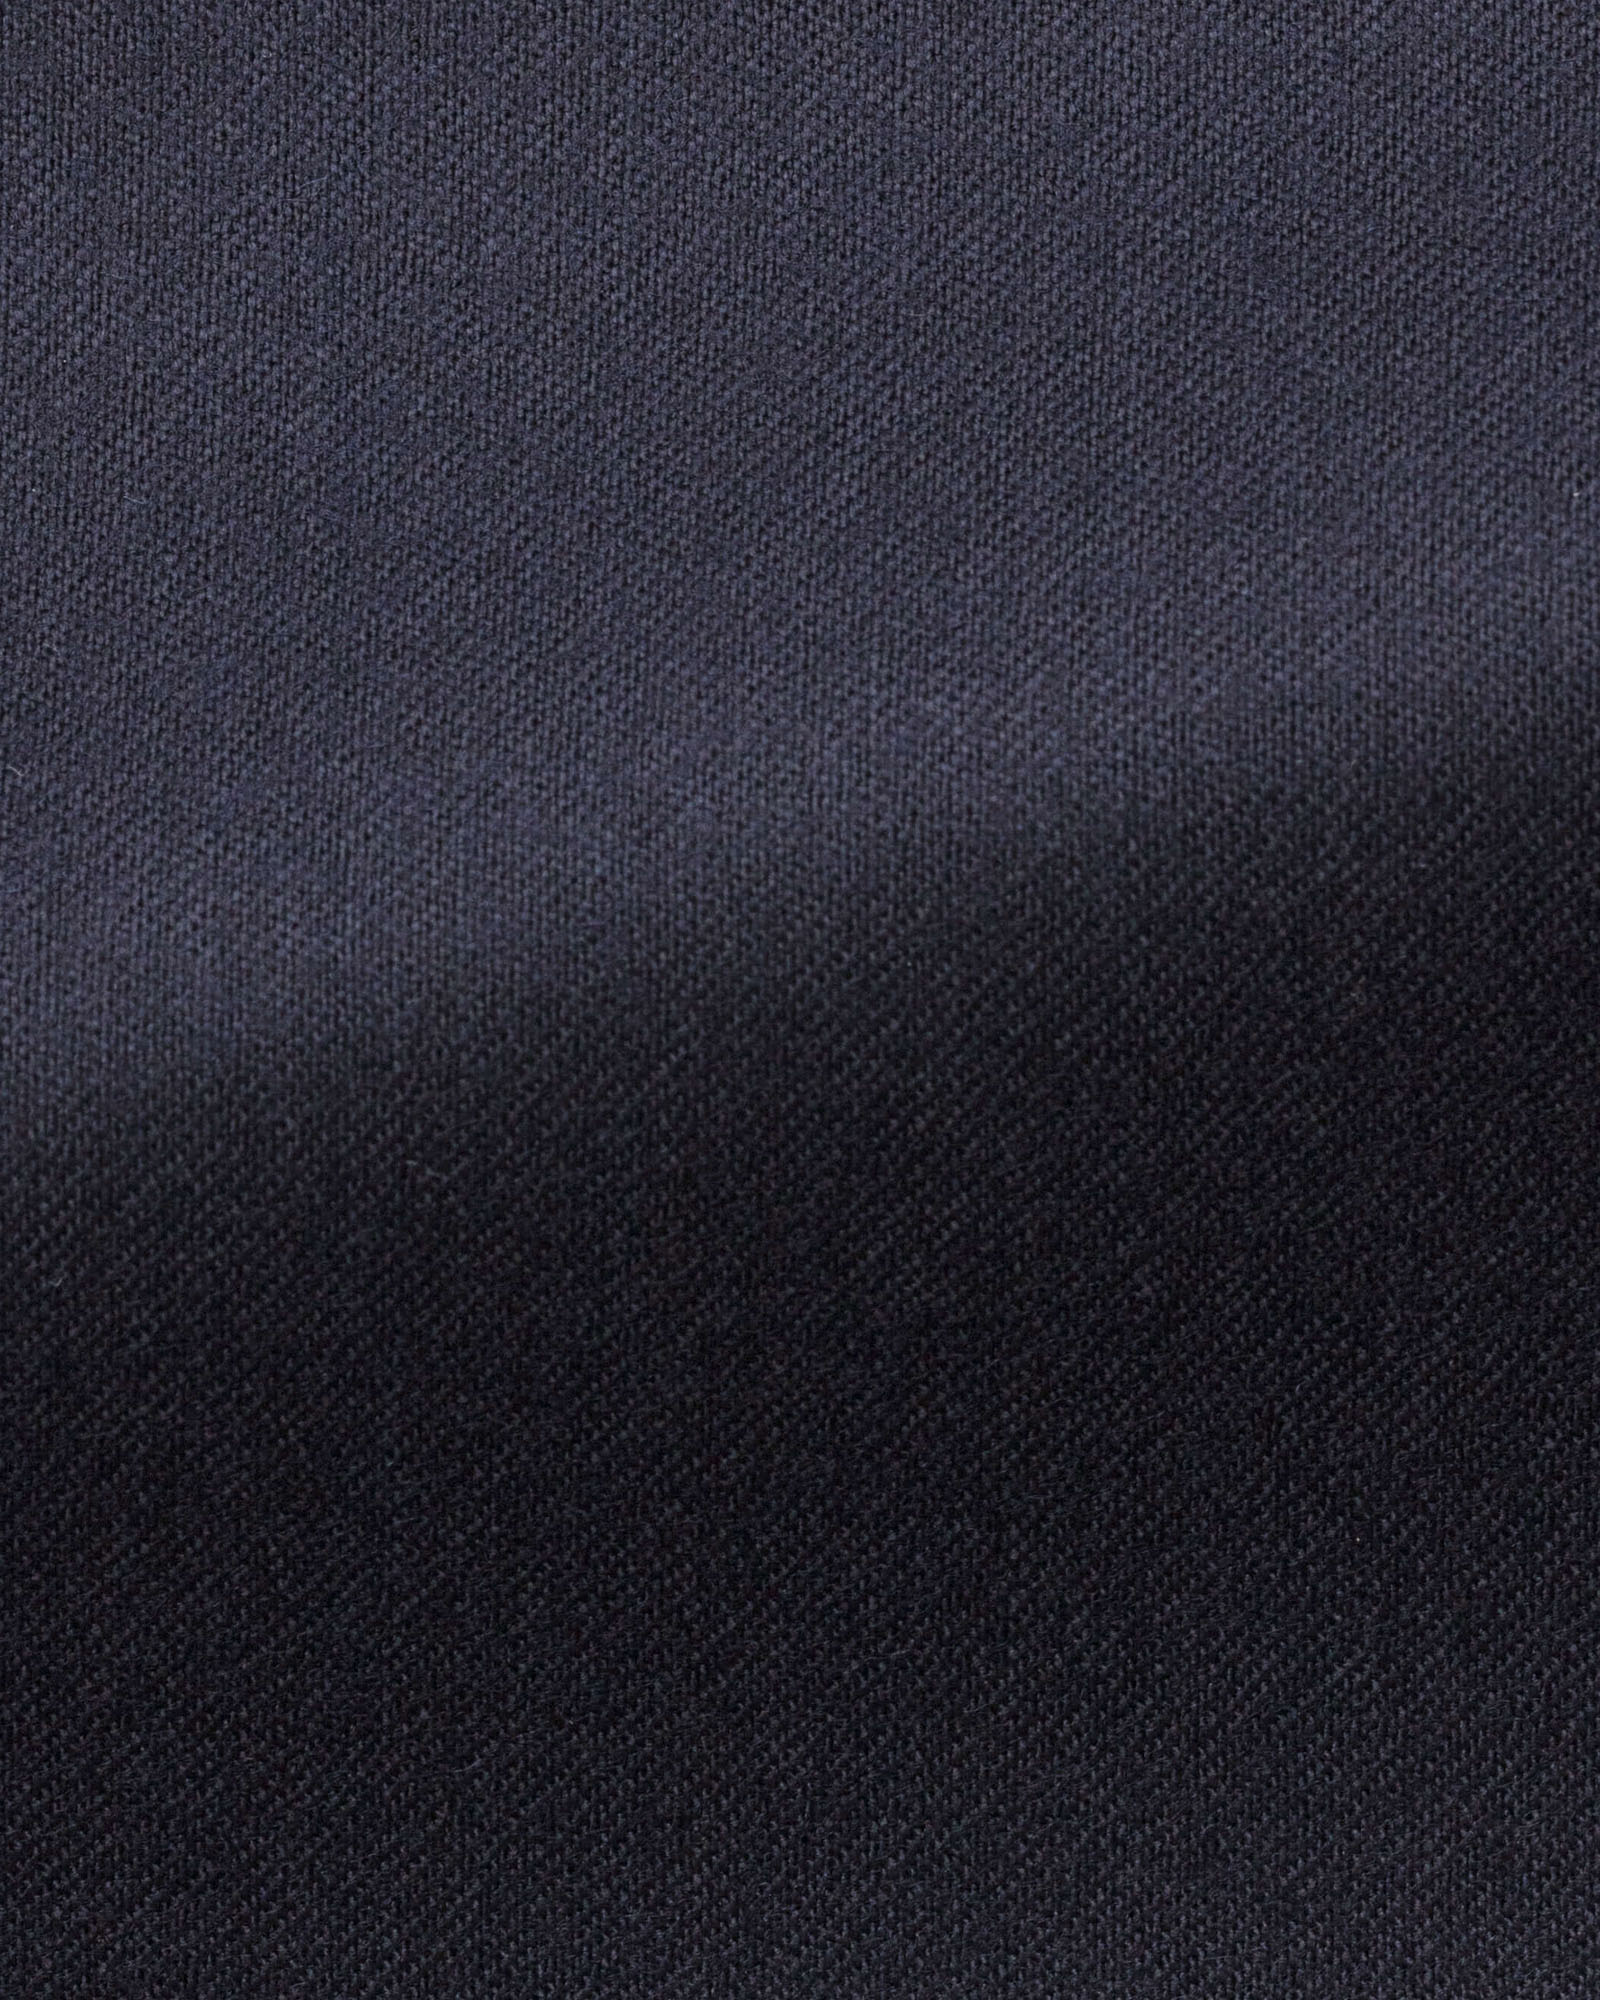 Midnattsblå soft jacket i flanell image 2